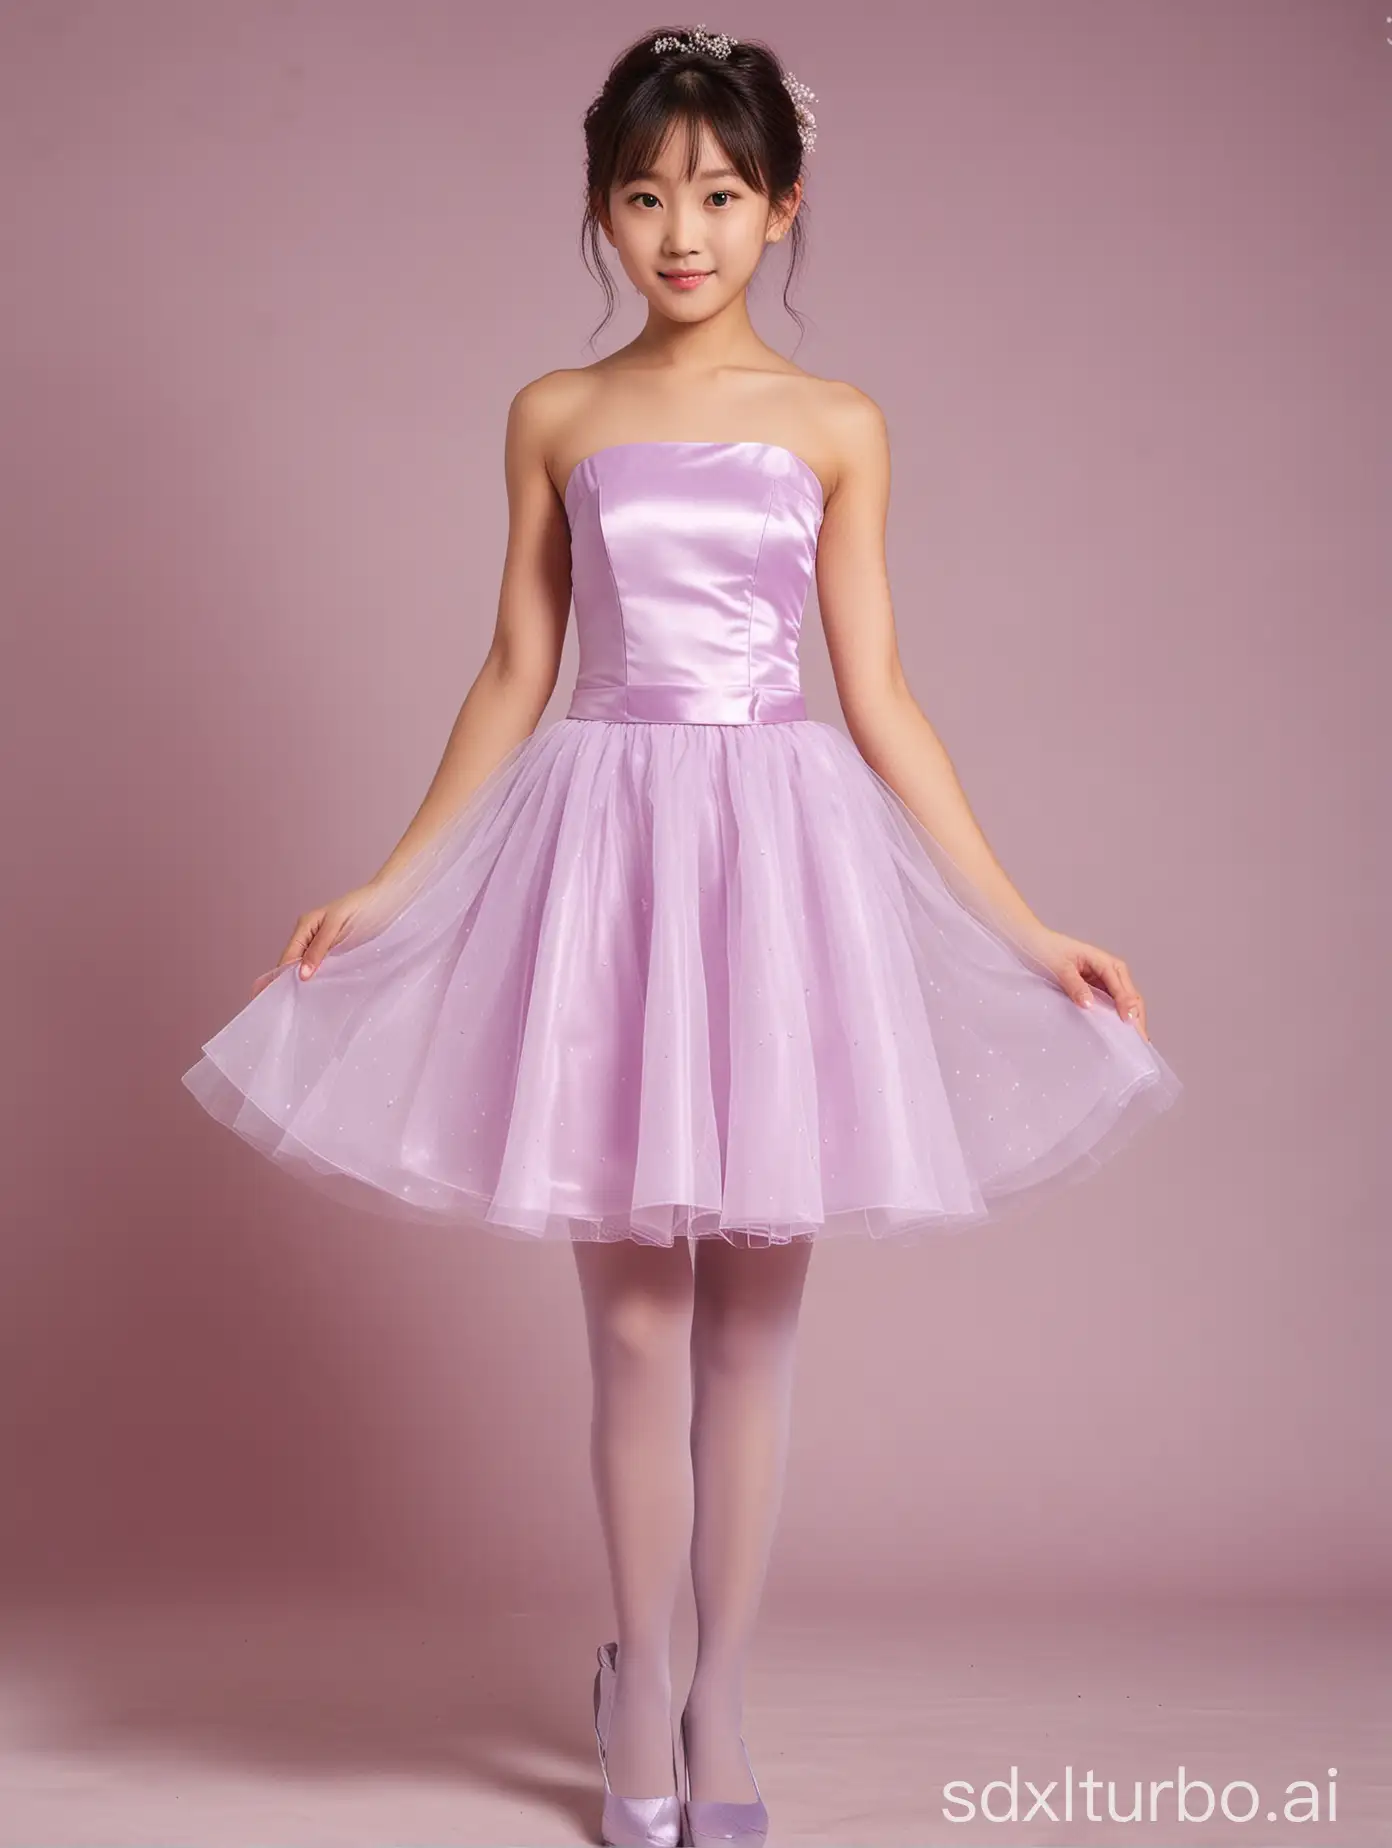 Japanese-Girl-in-Elegant-Light-Purple-Wedding-Dress-and-Pantyhose